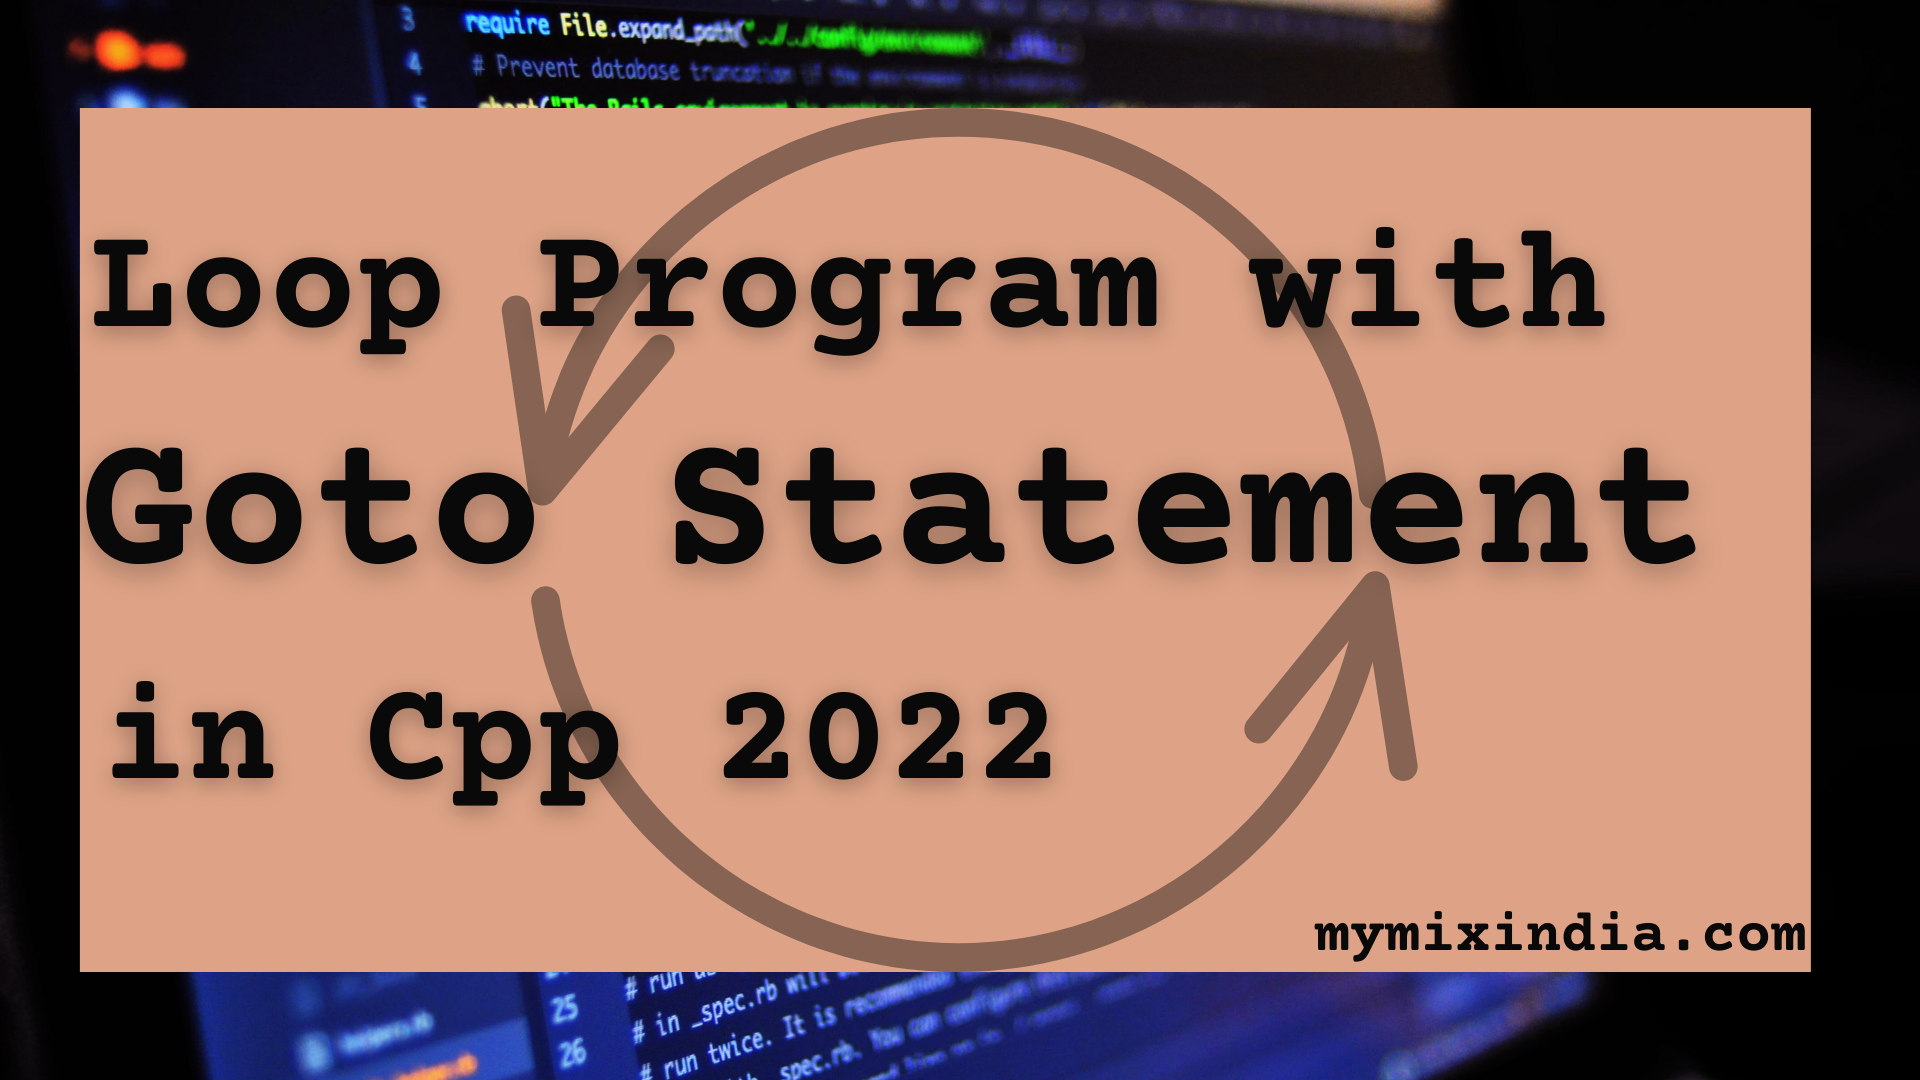 Loop Program with goto statement in cpp 2022 - mymixindia.com